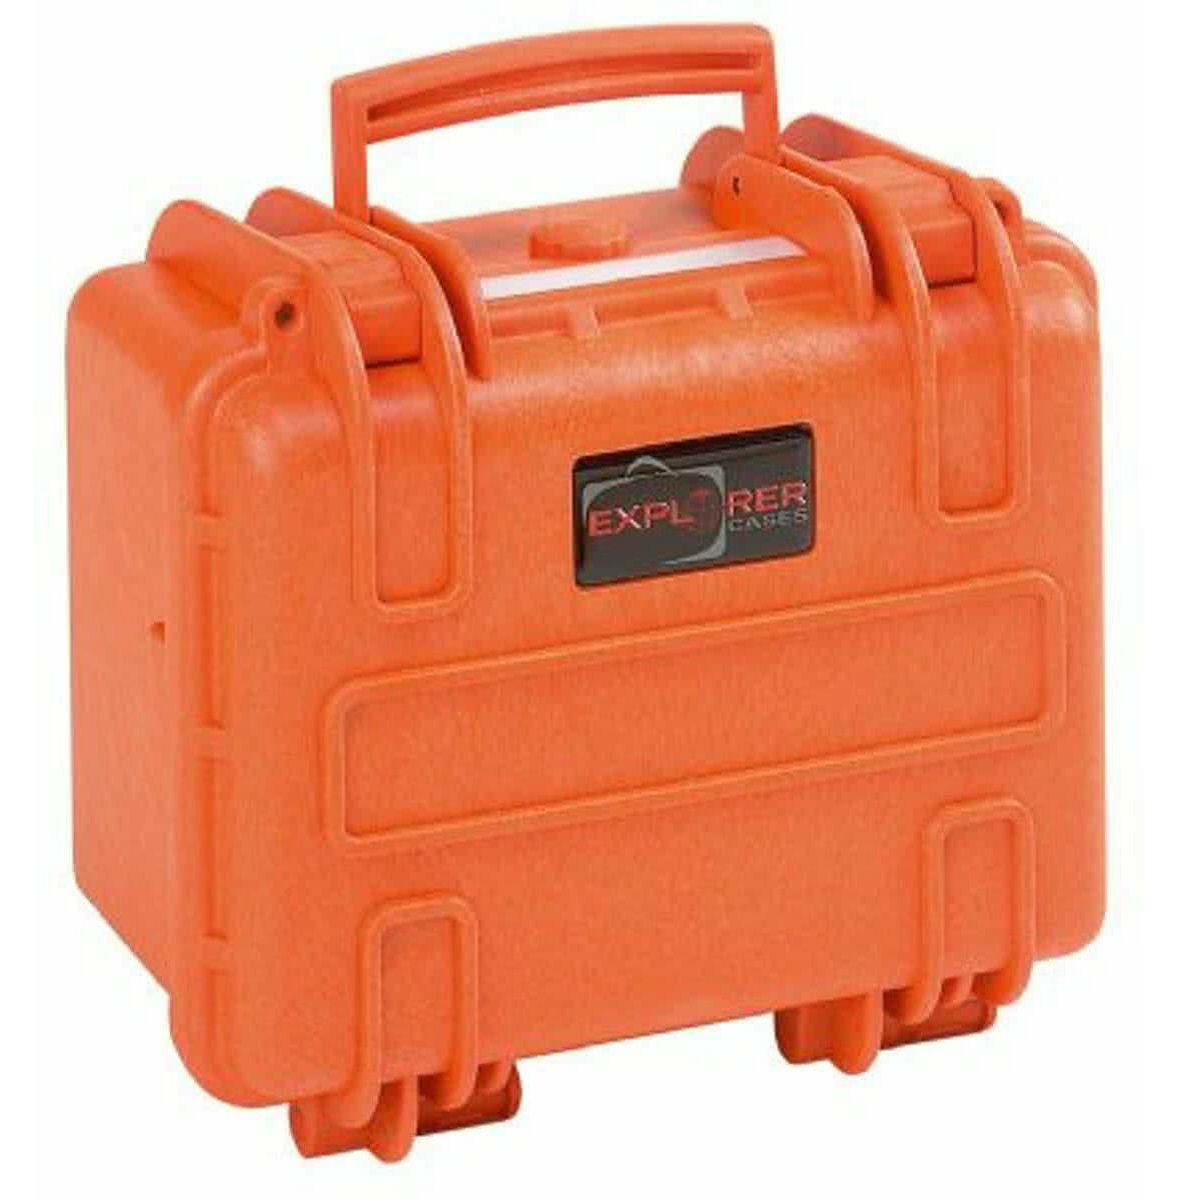 Explorer Cases 2717 Orange 305x270x194mm kufer za foto opremu kofer Camera Case